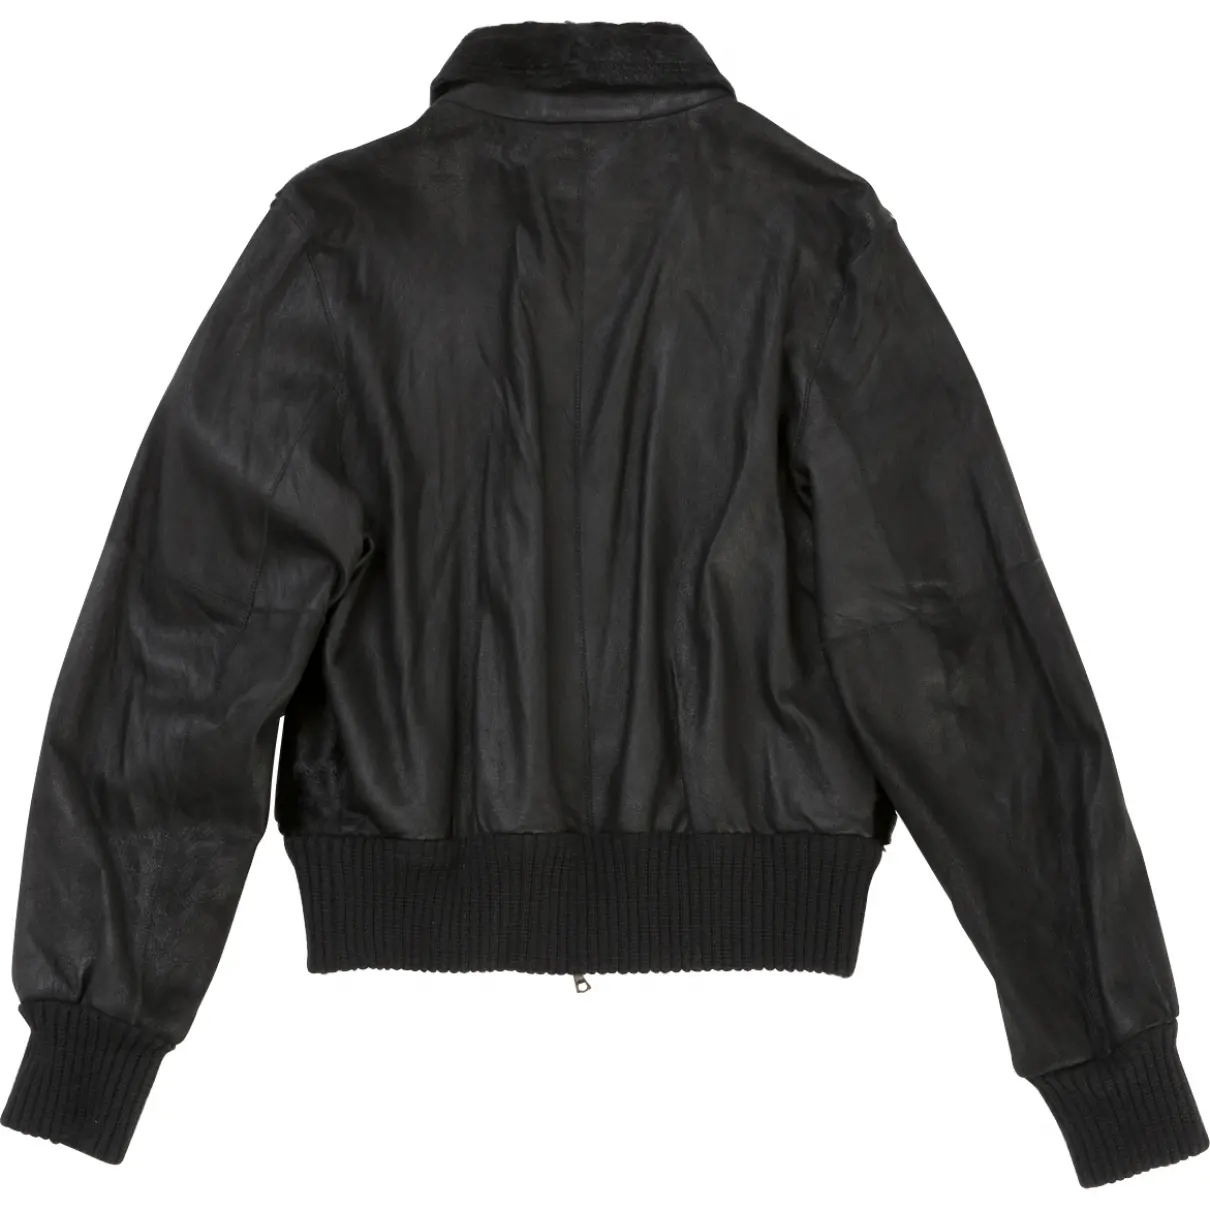 Charles Jourdan Leather biker jacket for sale